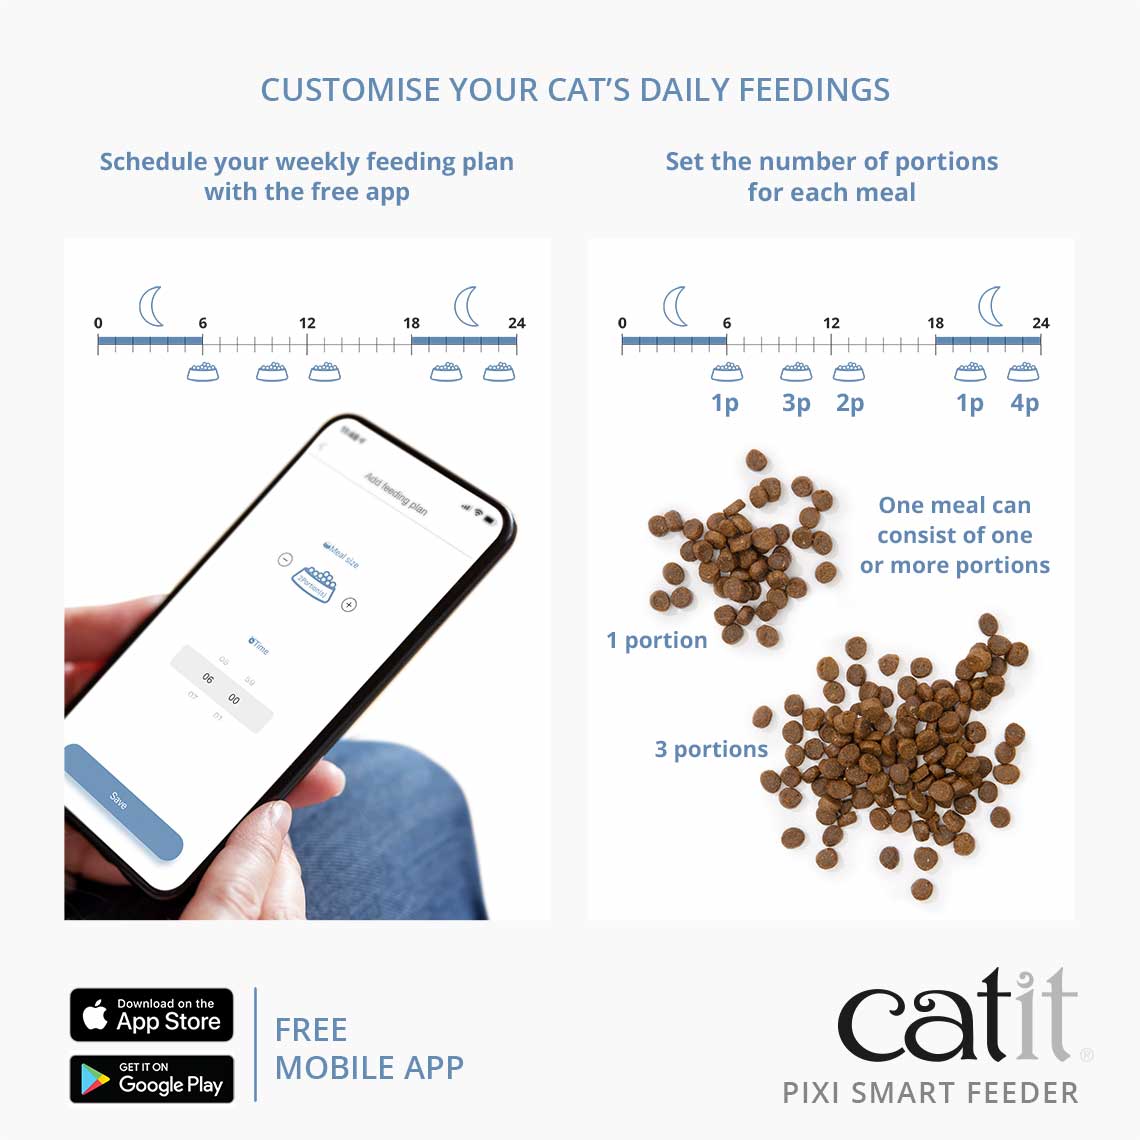 Catit PIXI Smart Feeder for Cats